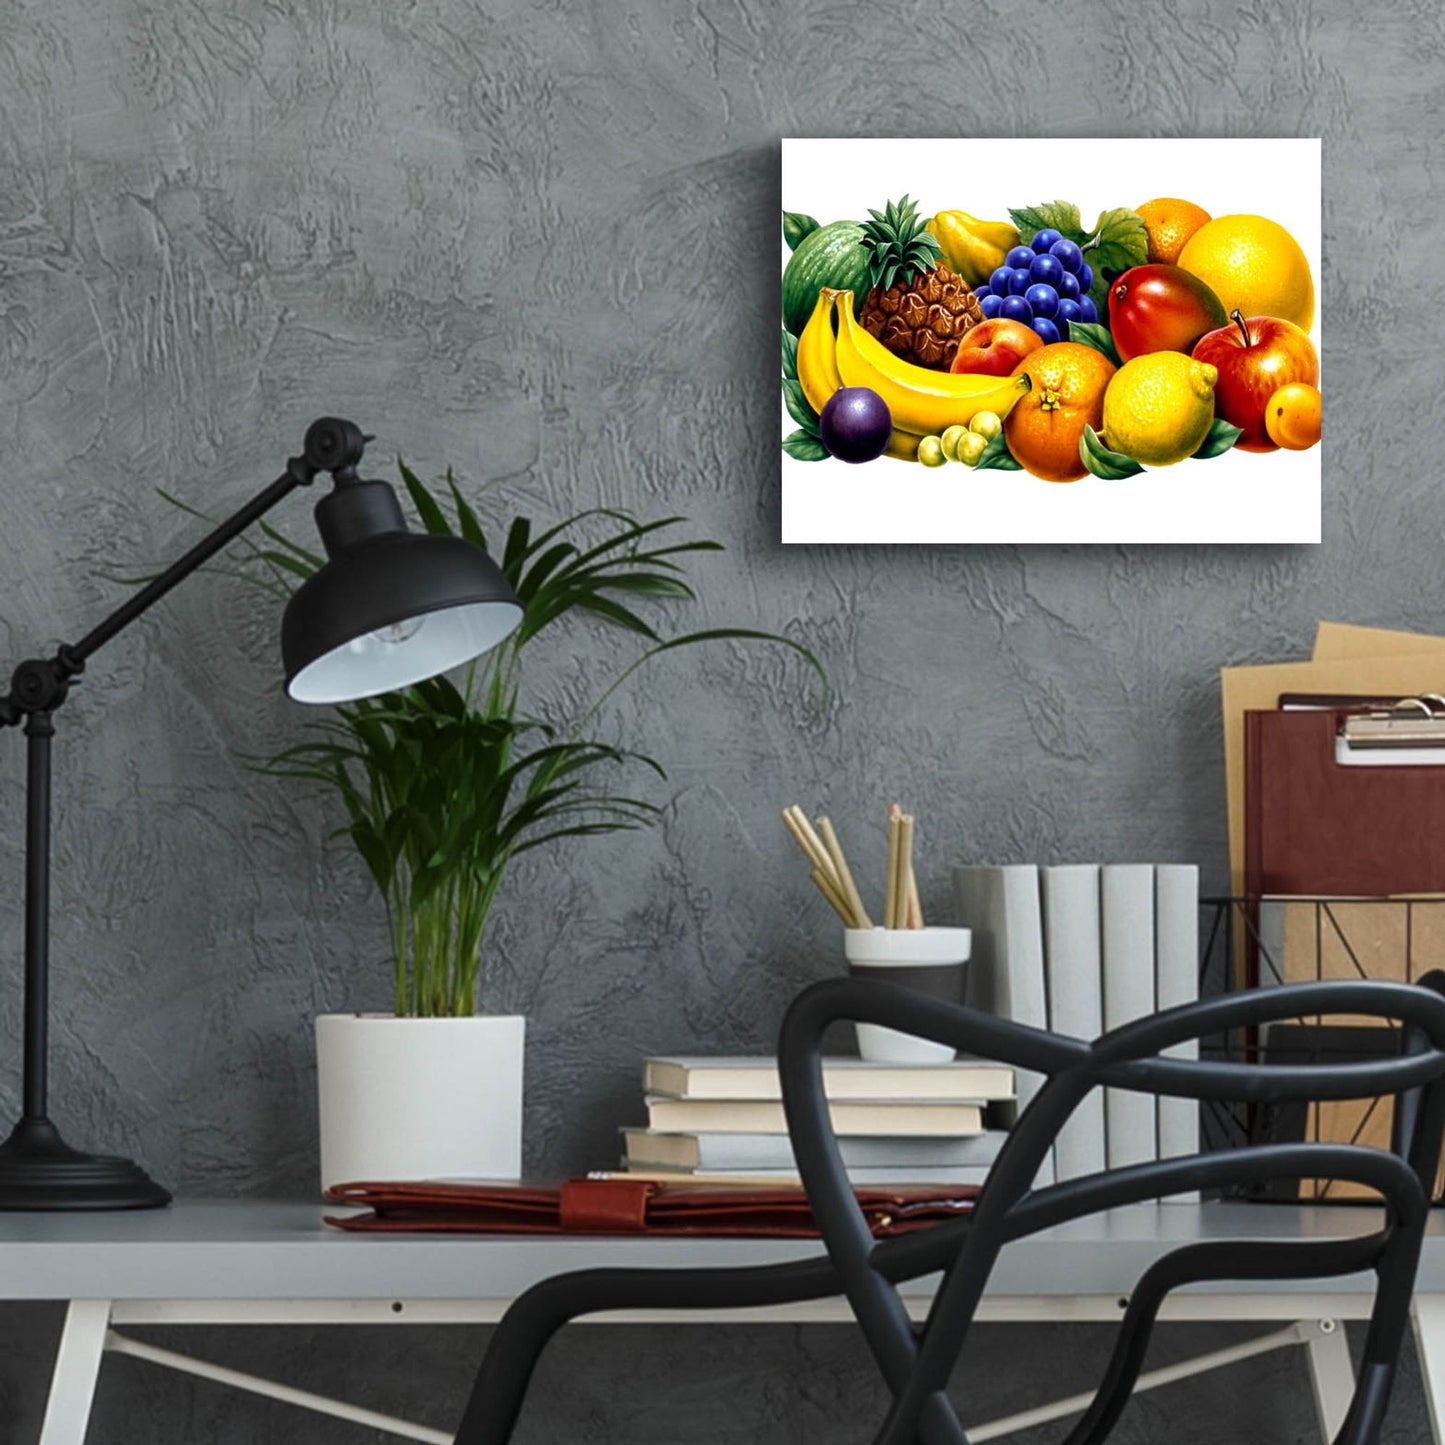 Epic Art 'Fruit' by Harro Maass, Acrylic Glass Wall Art,16x12